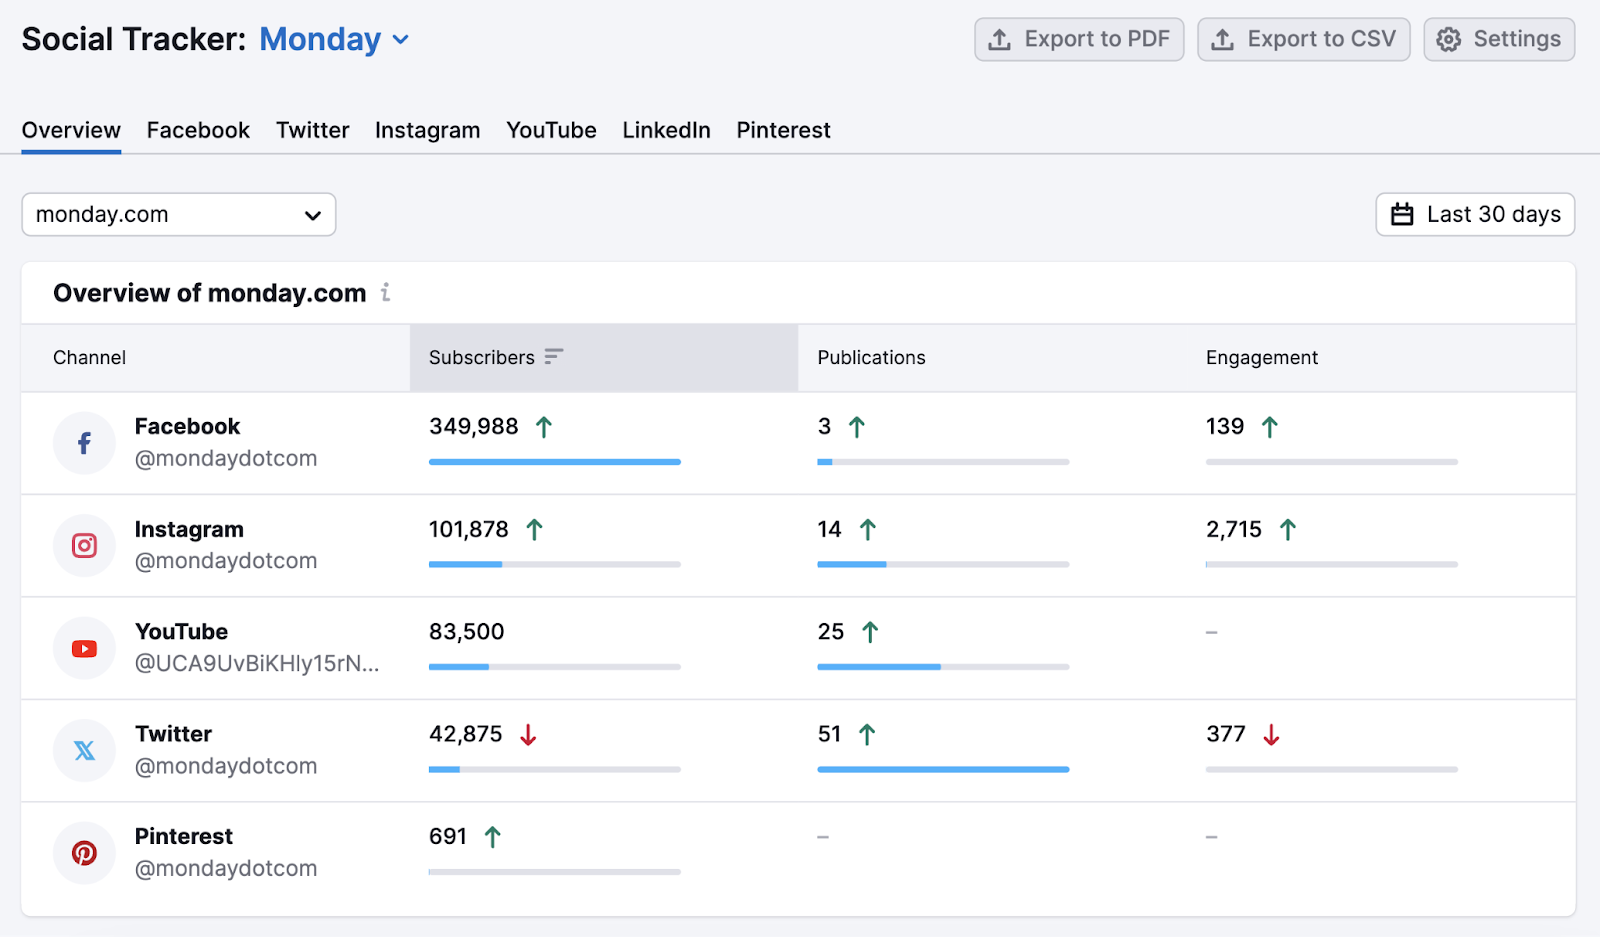 Social media overview dashboard for monday.com in Semrush Social Tracker